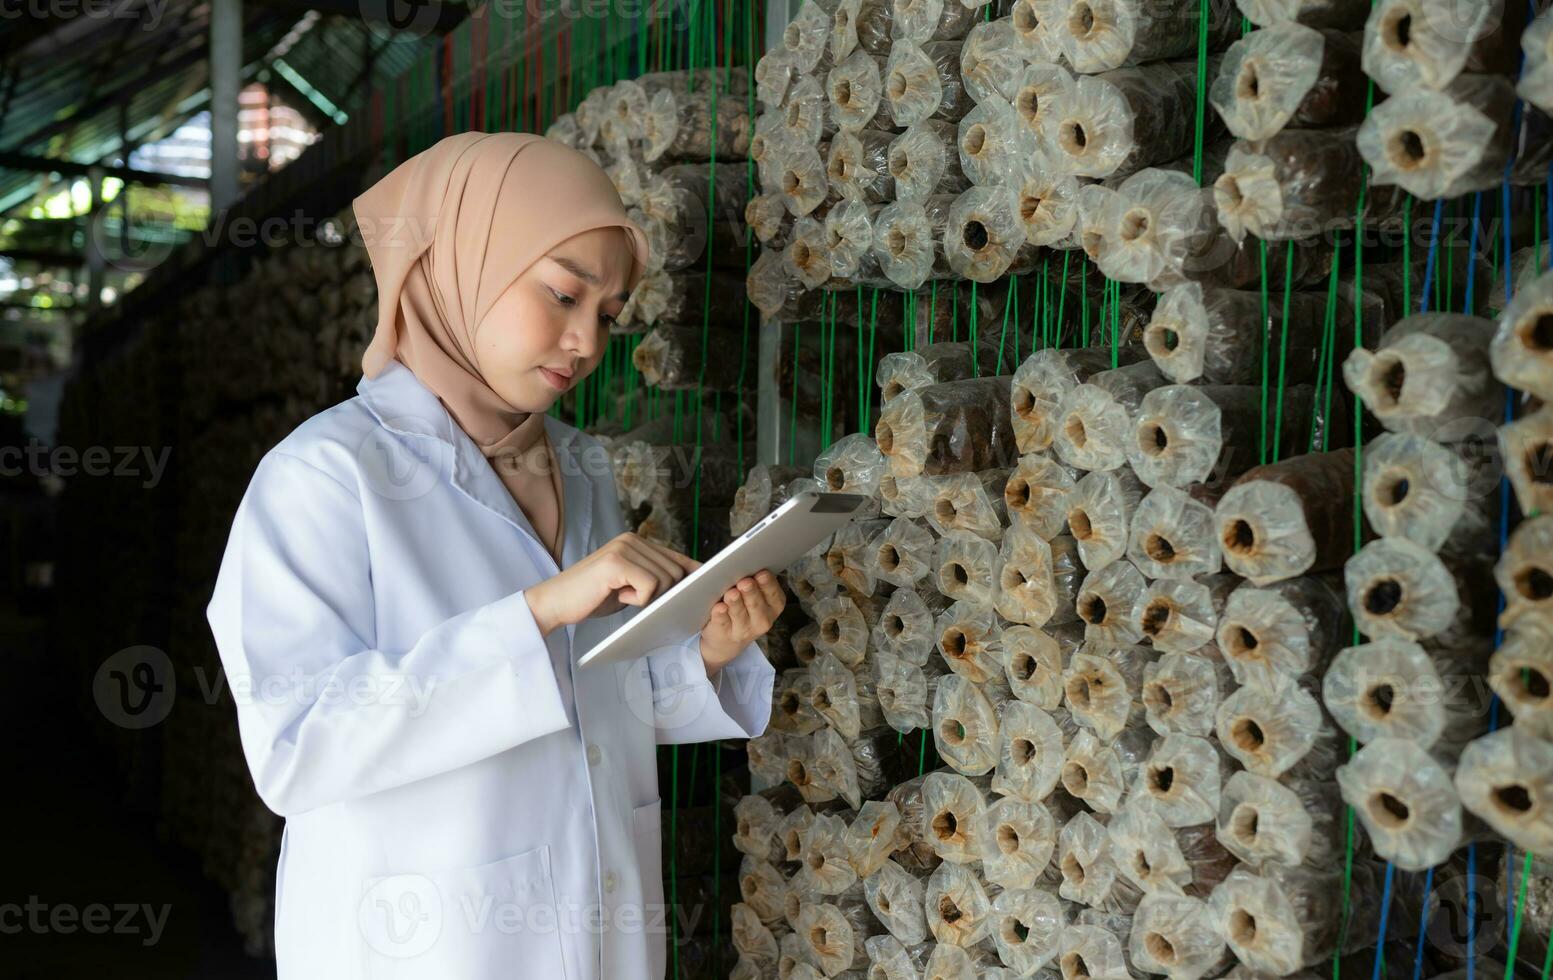 jung asiatisch Muslim weiblich Wissenschaftler Forschung Arbeit beim Pilz Fabrik, Sammeln reifen Pilze im Pilz Haus zum Labor Experimente. foto